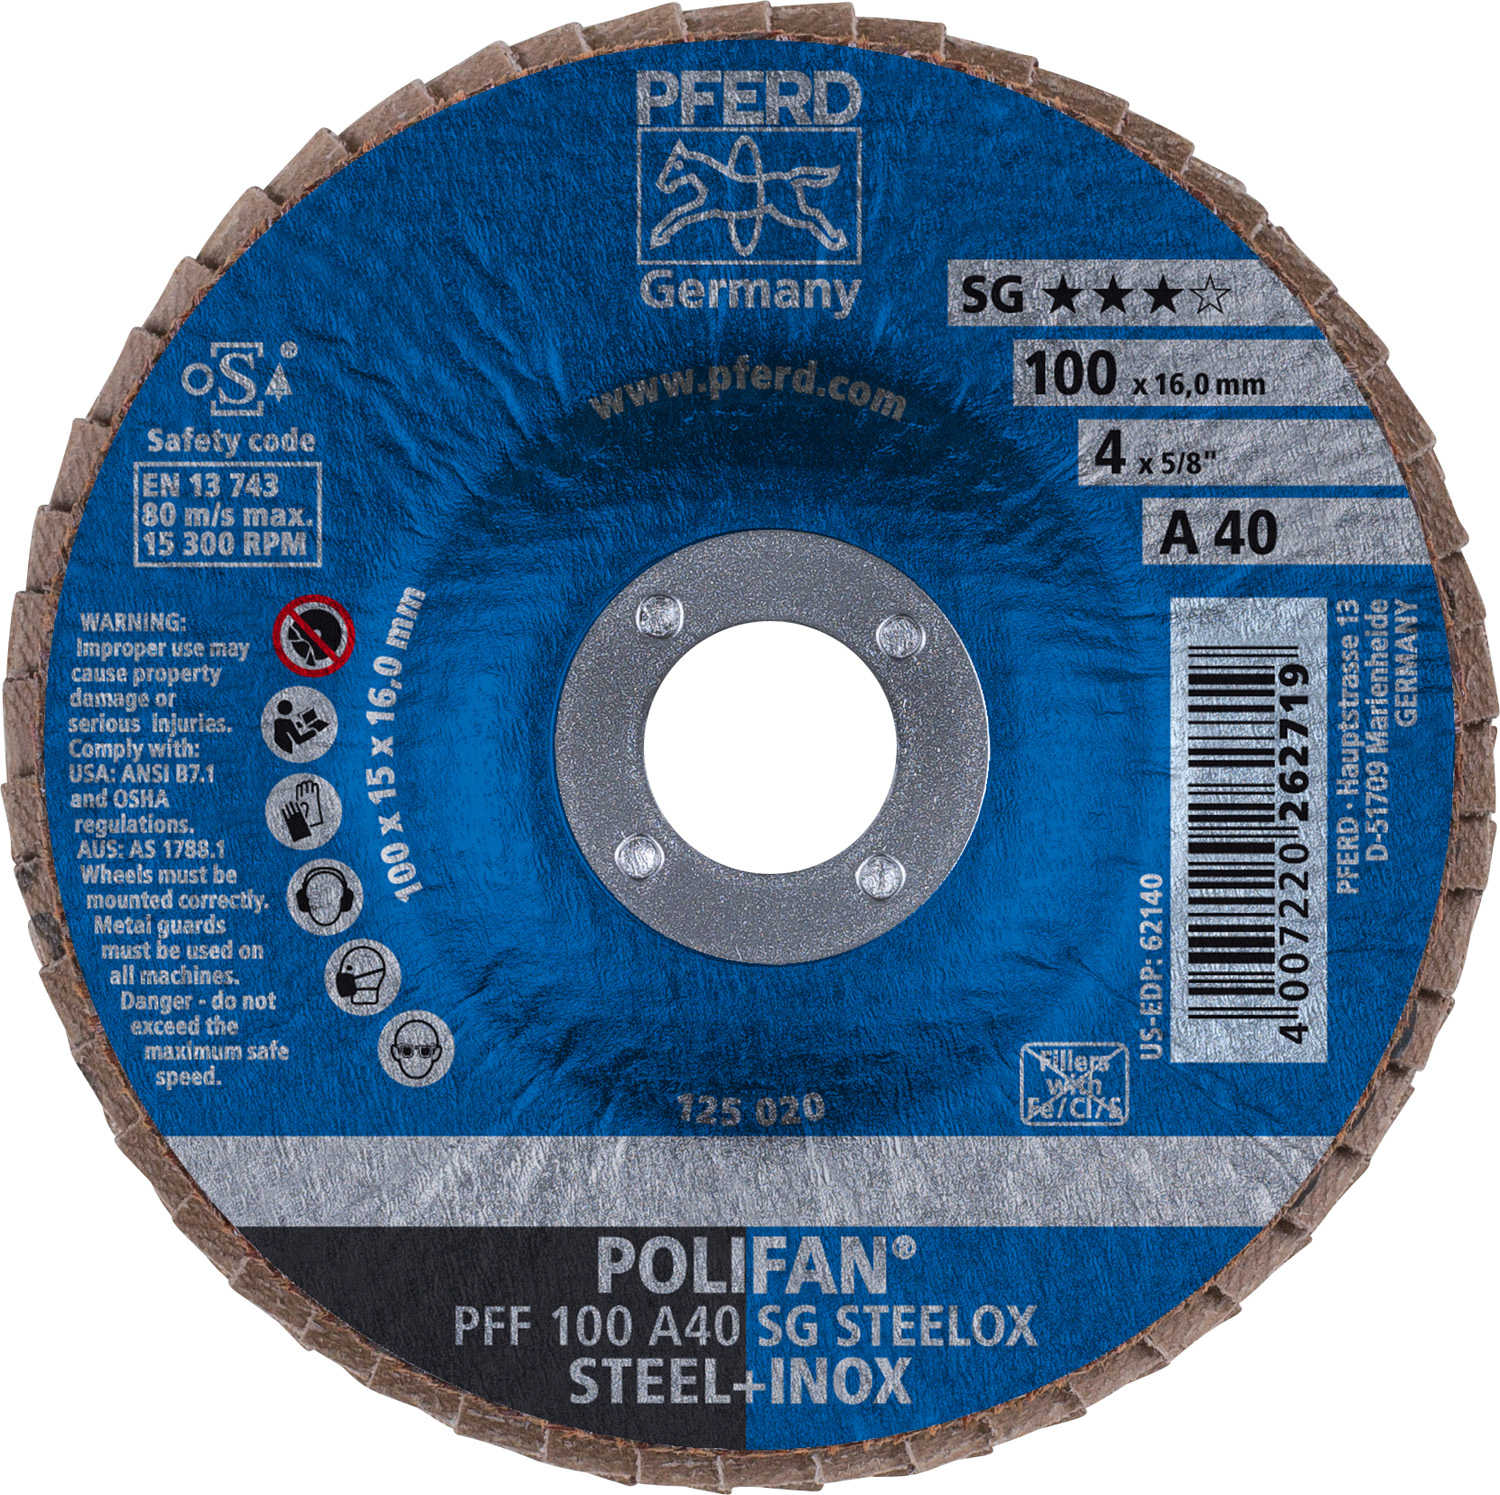 4 x 5/8" A.H. POLIFAN® Flap Disc, A SG STEELOX, Aluminum oxide, 40 Grit, Flat